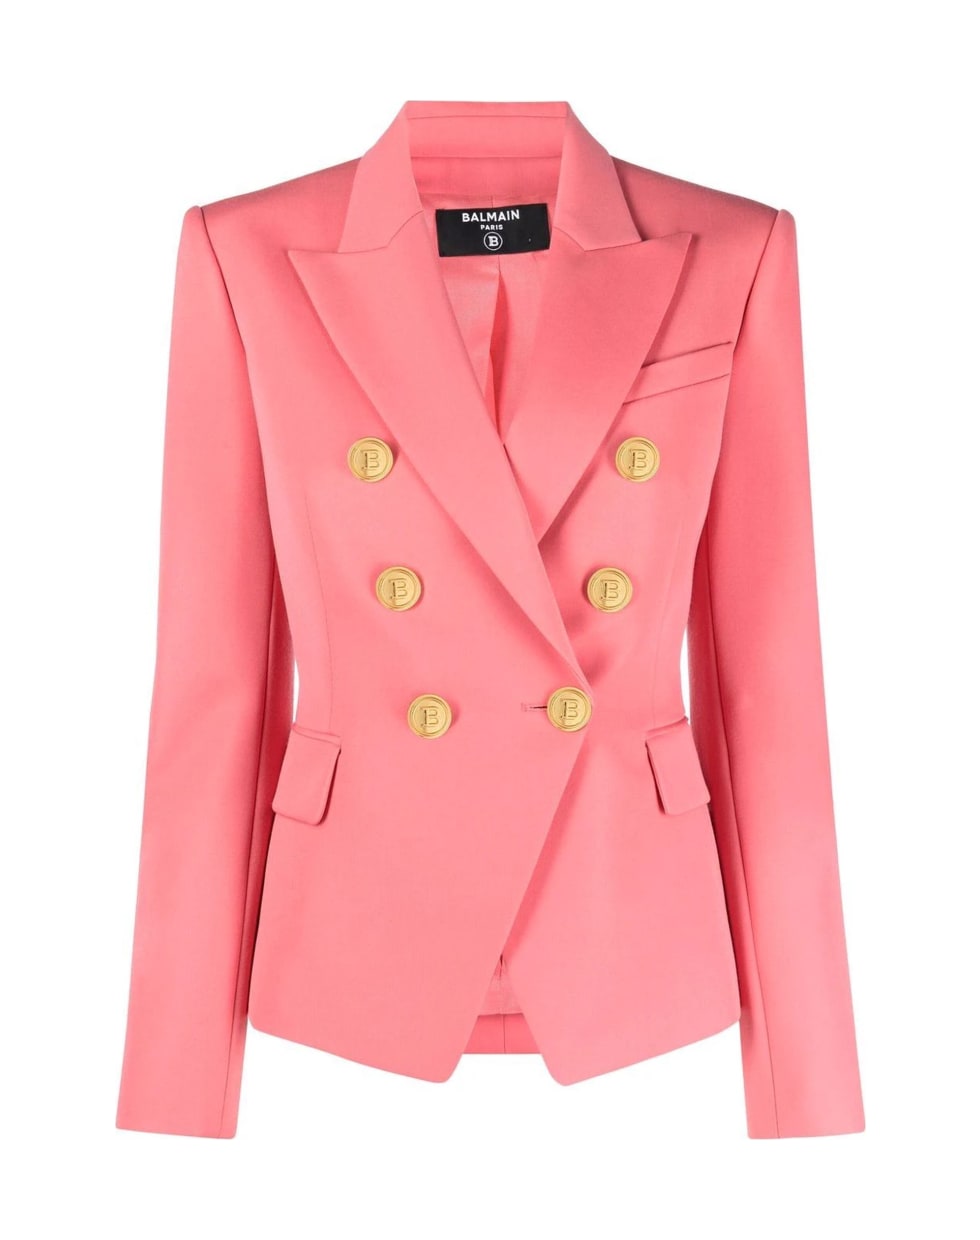 Balmain Salmon Pink Wool Jacket | italist, ALWAYS LIKE A SALE